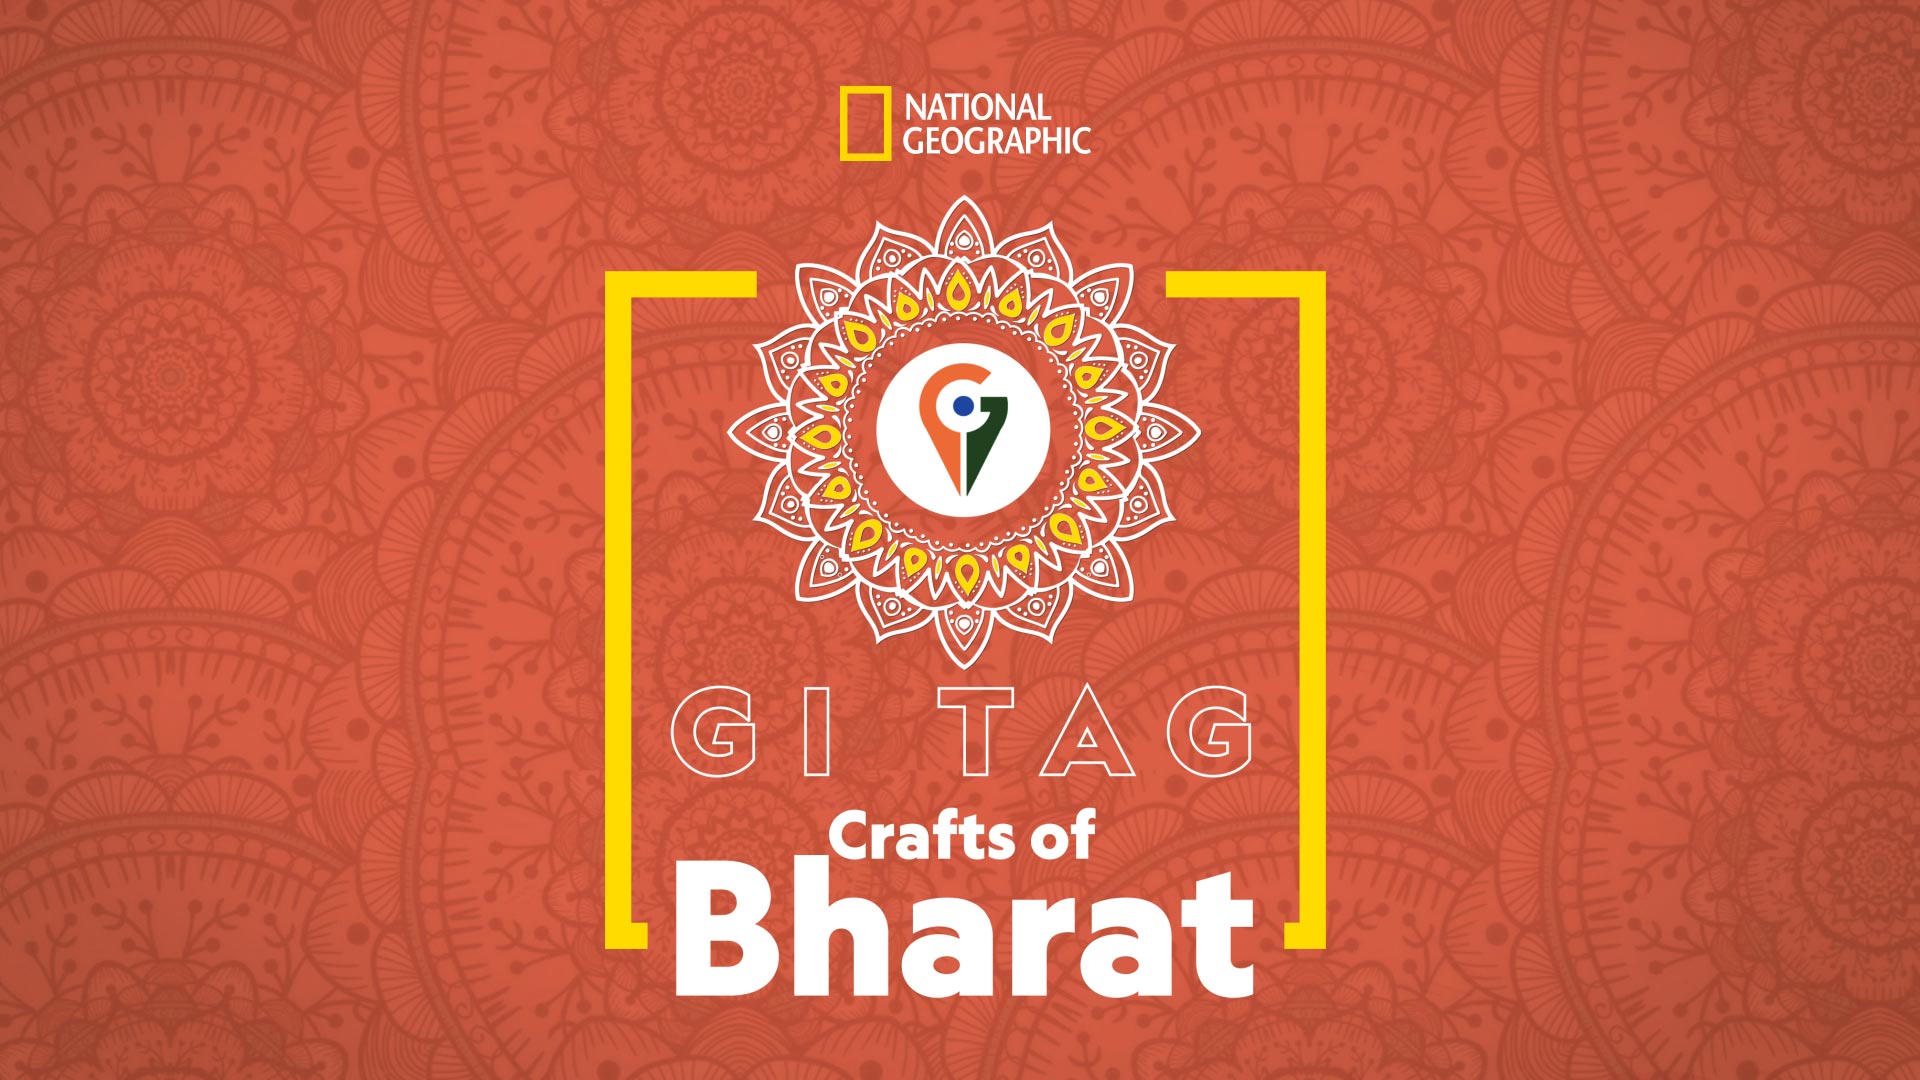 GI TAG Crafts of Bharat